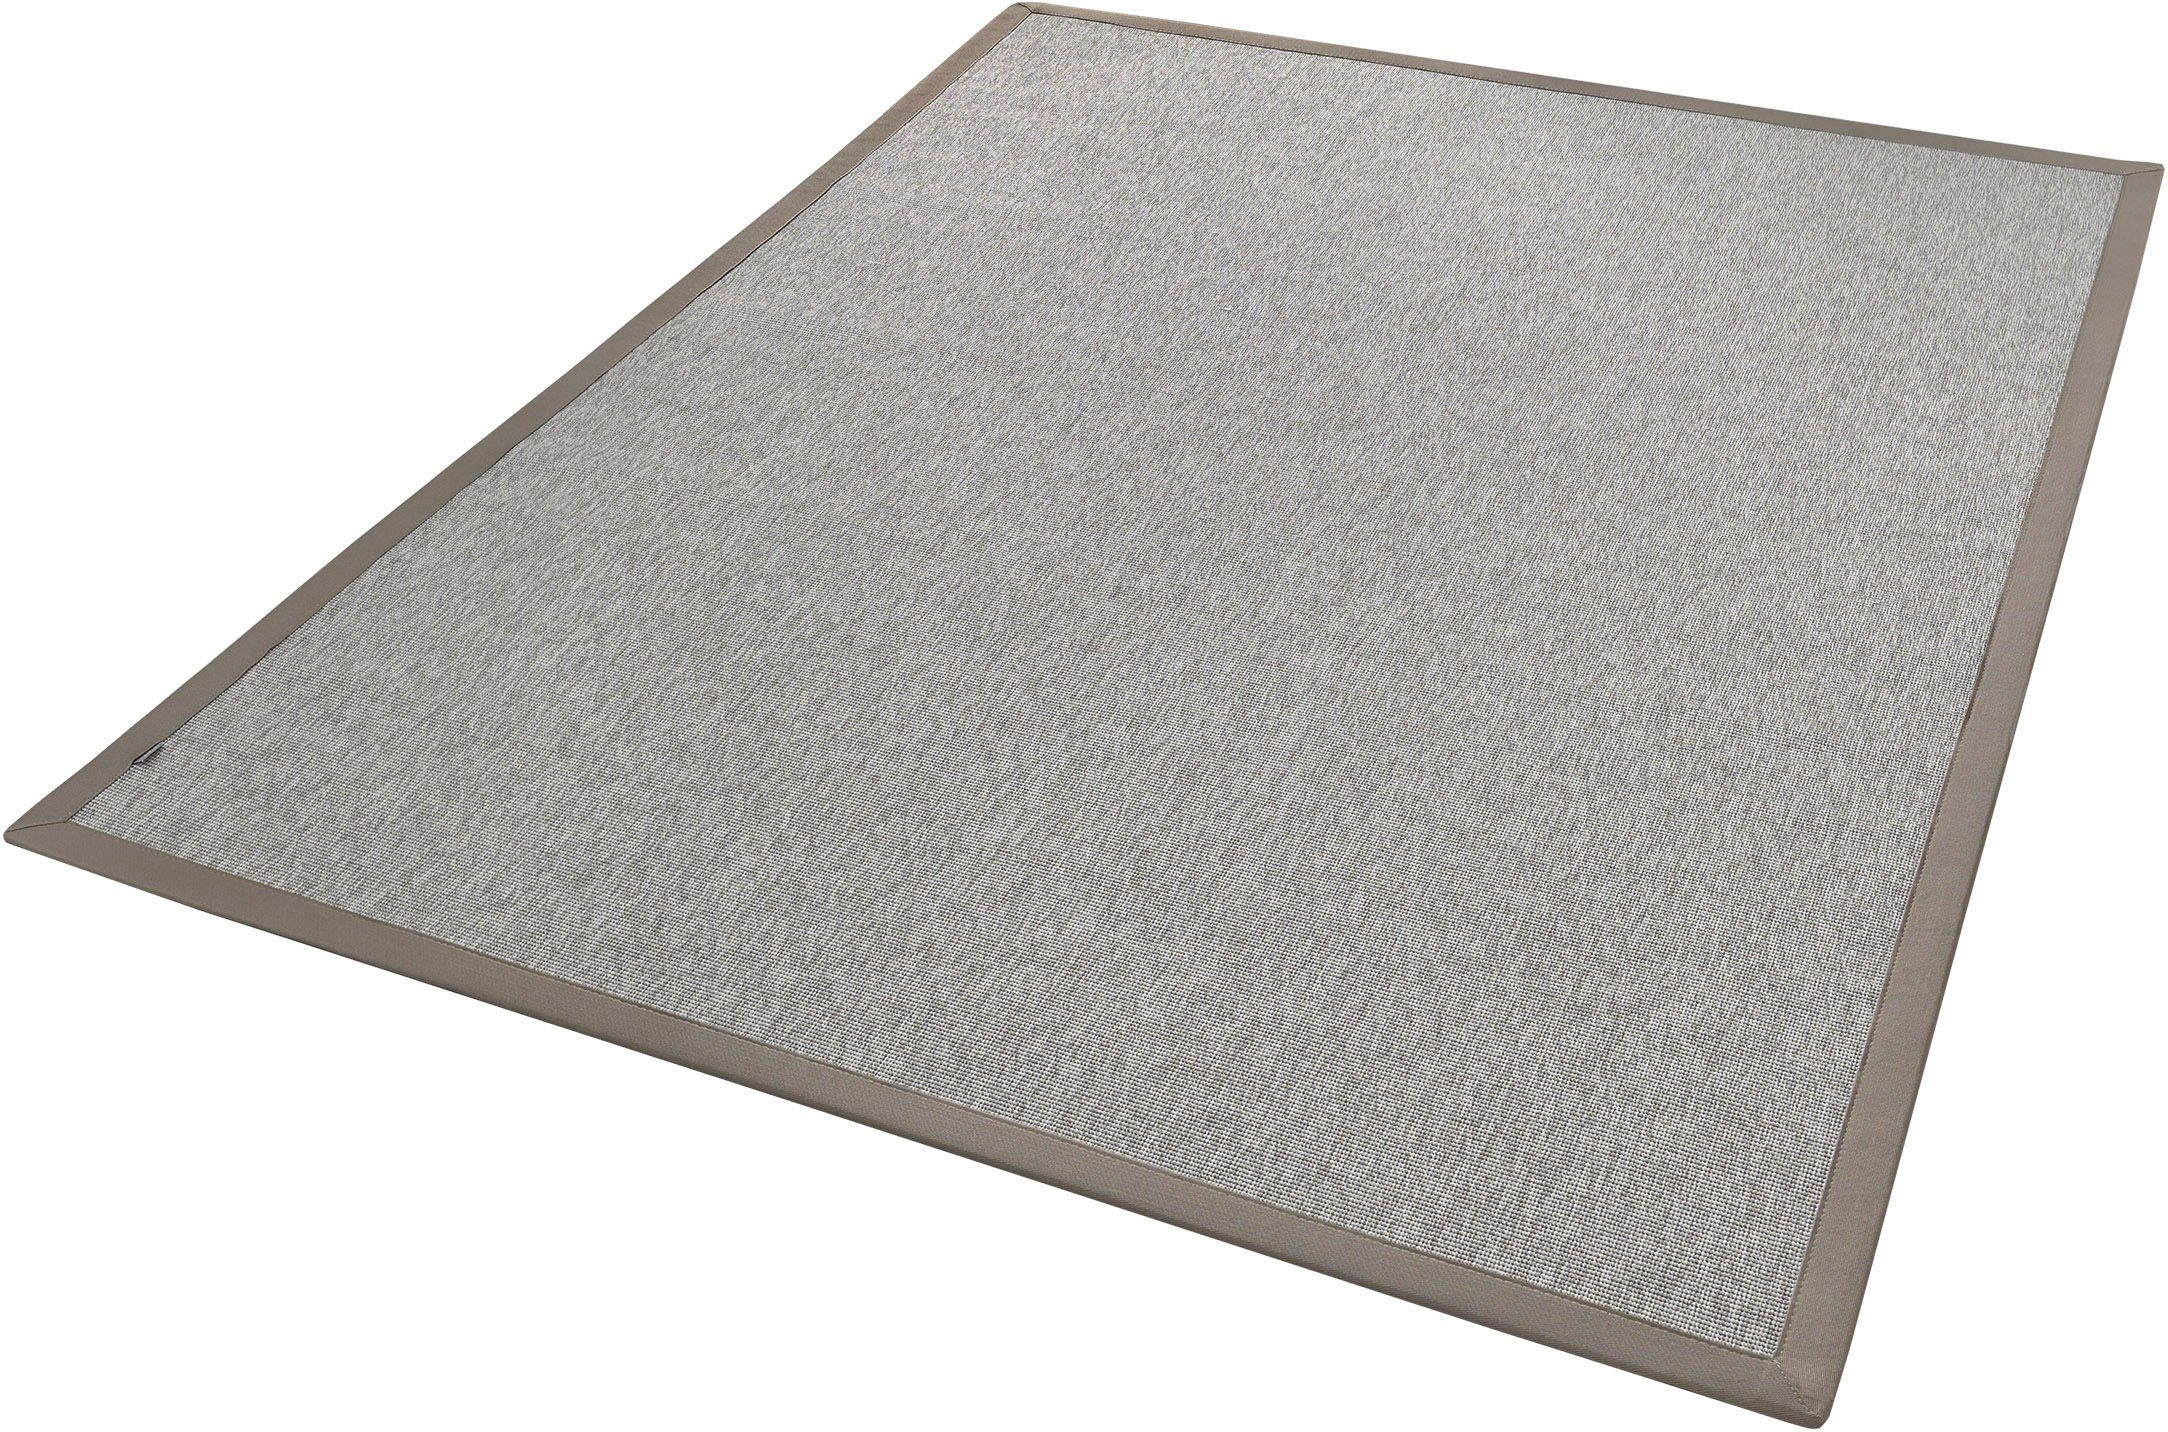 Teppichboden Naturino RipsS2 Spezial, Dekowe, rechteckig, Höhe: 8 mm, Flachgewebe, meliert, Sisal-Optik, In- und Outdoor geeignet grau